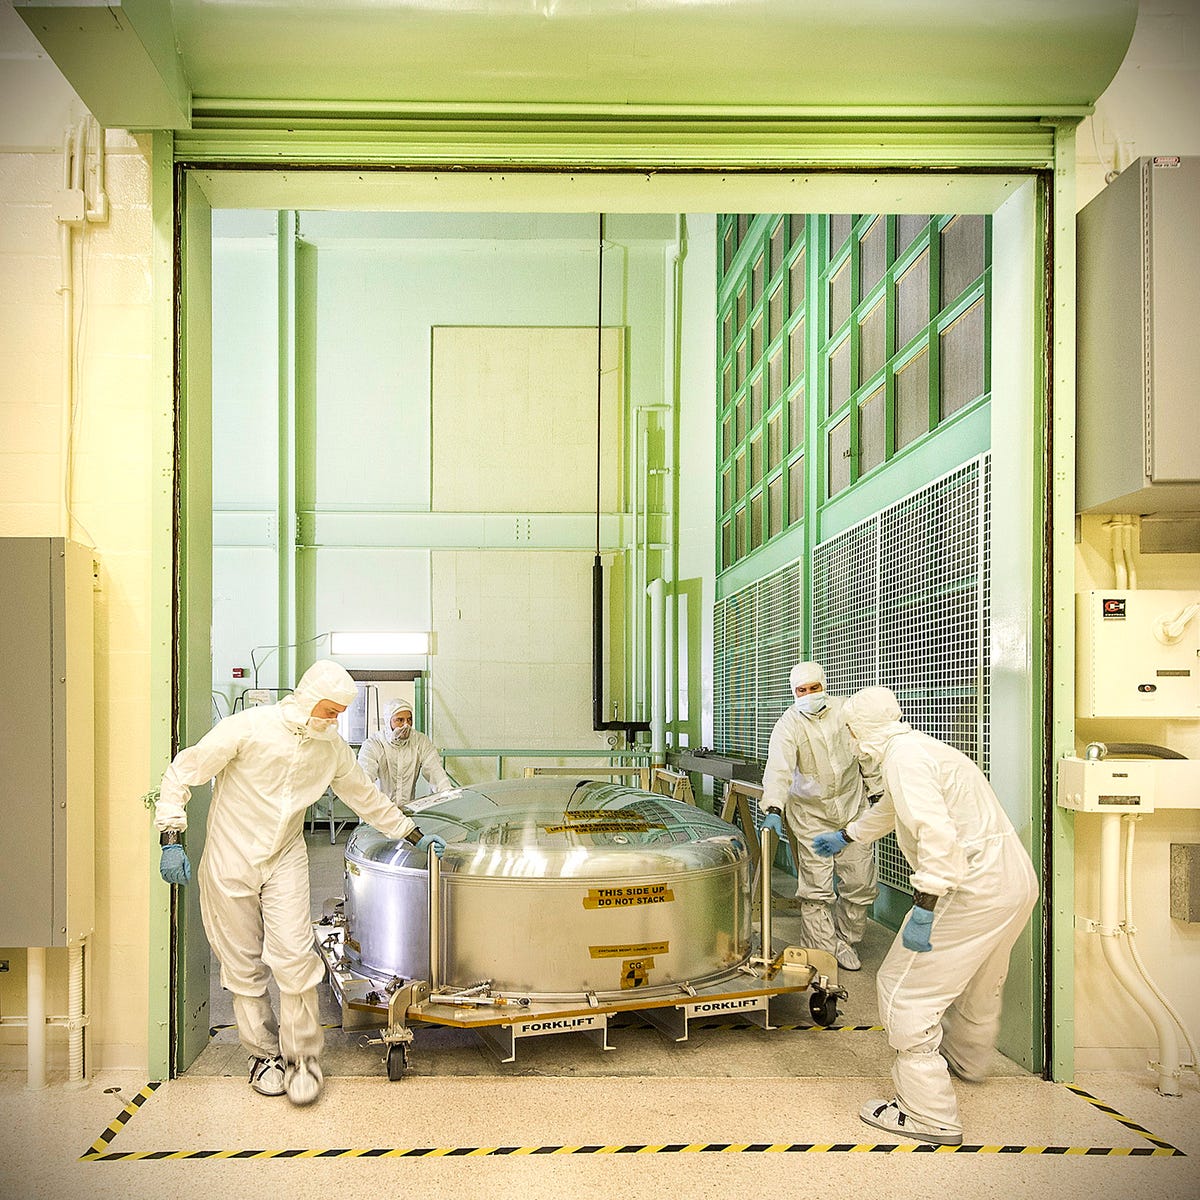 The James Webb Space Telescope ETU (engineering test unit) primary mirror segment returning to the cleanroom at NASA Goddard.